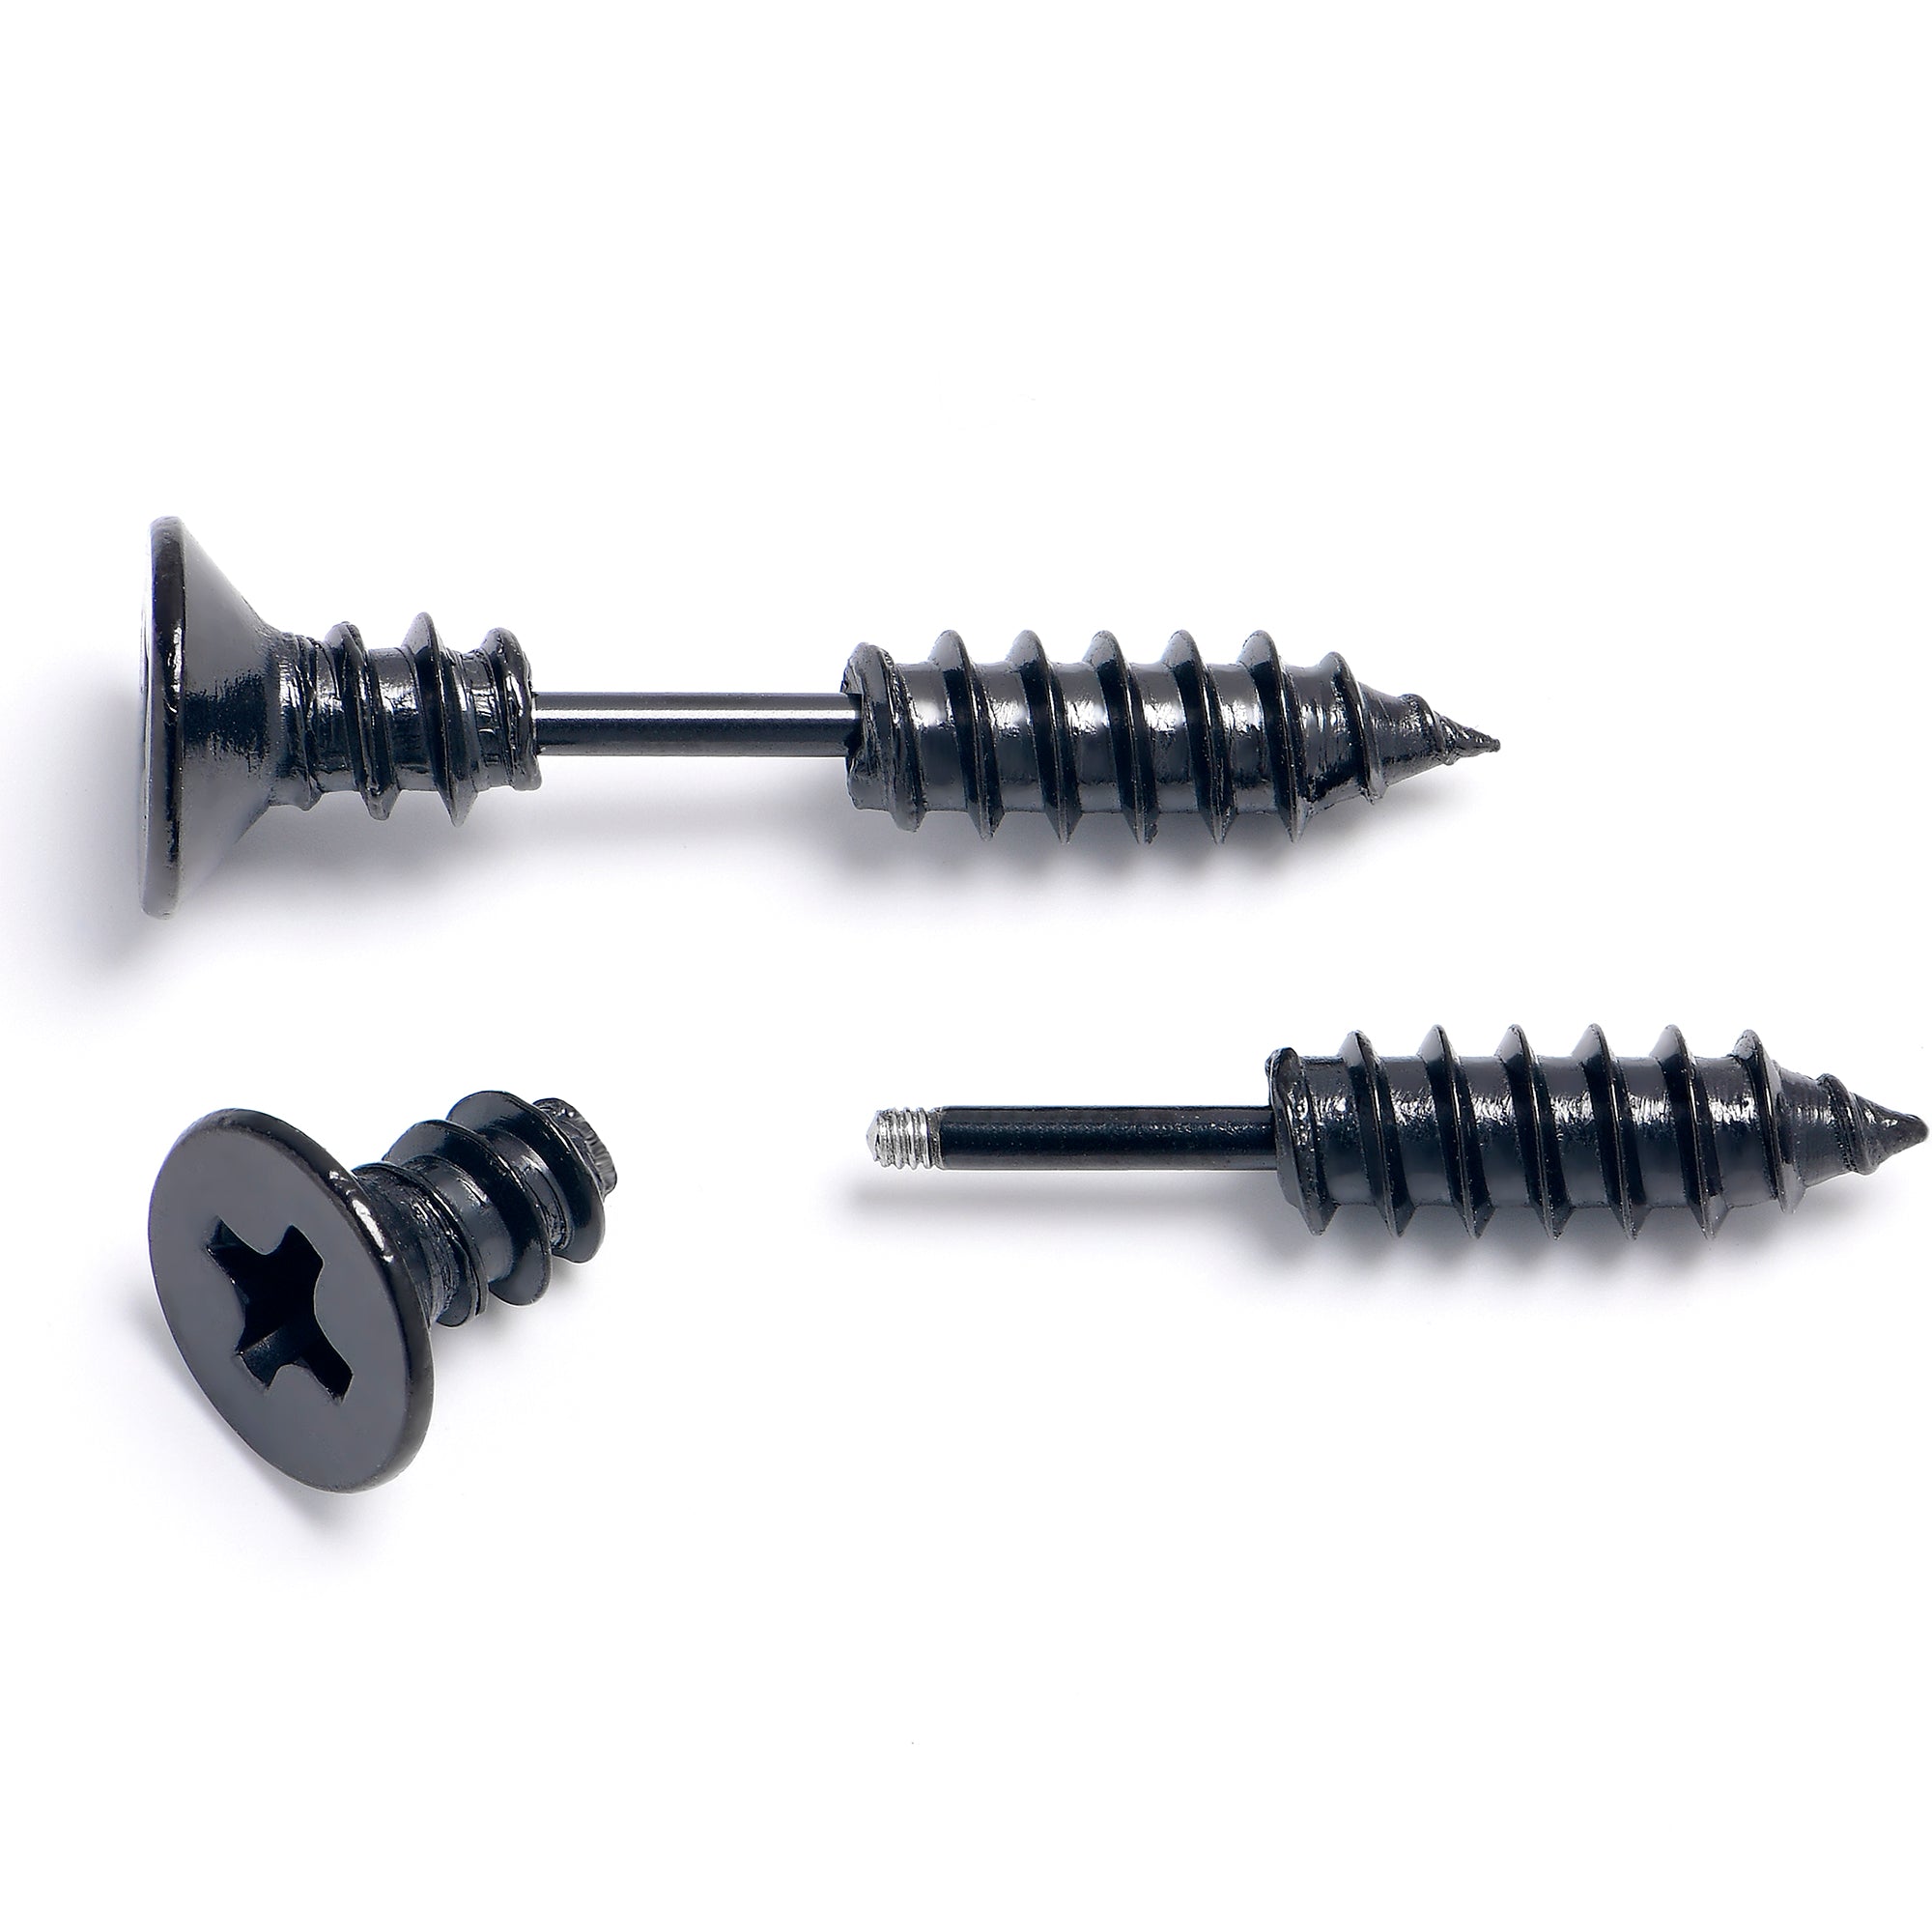 Black Stainless Steel Screw Stud Earrings Cheater Plug Set